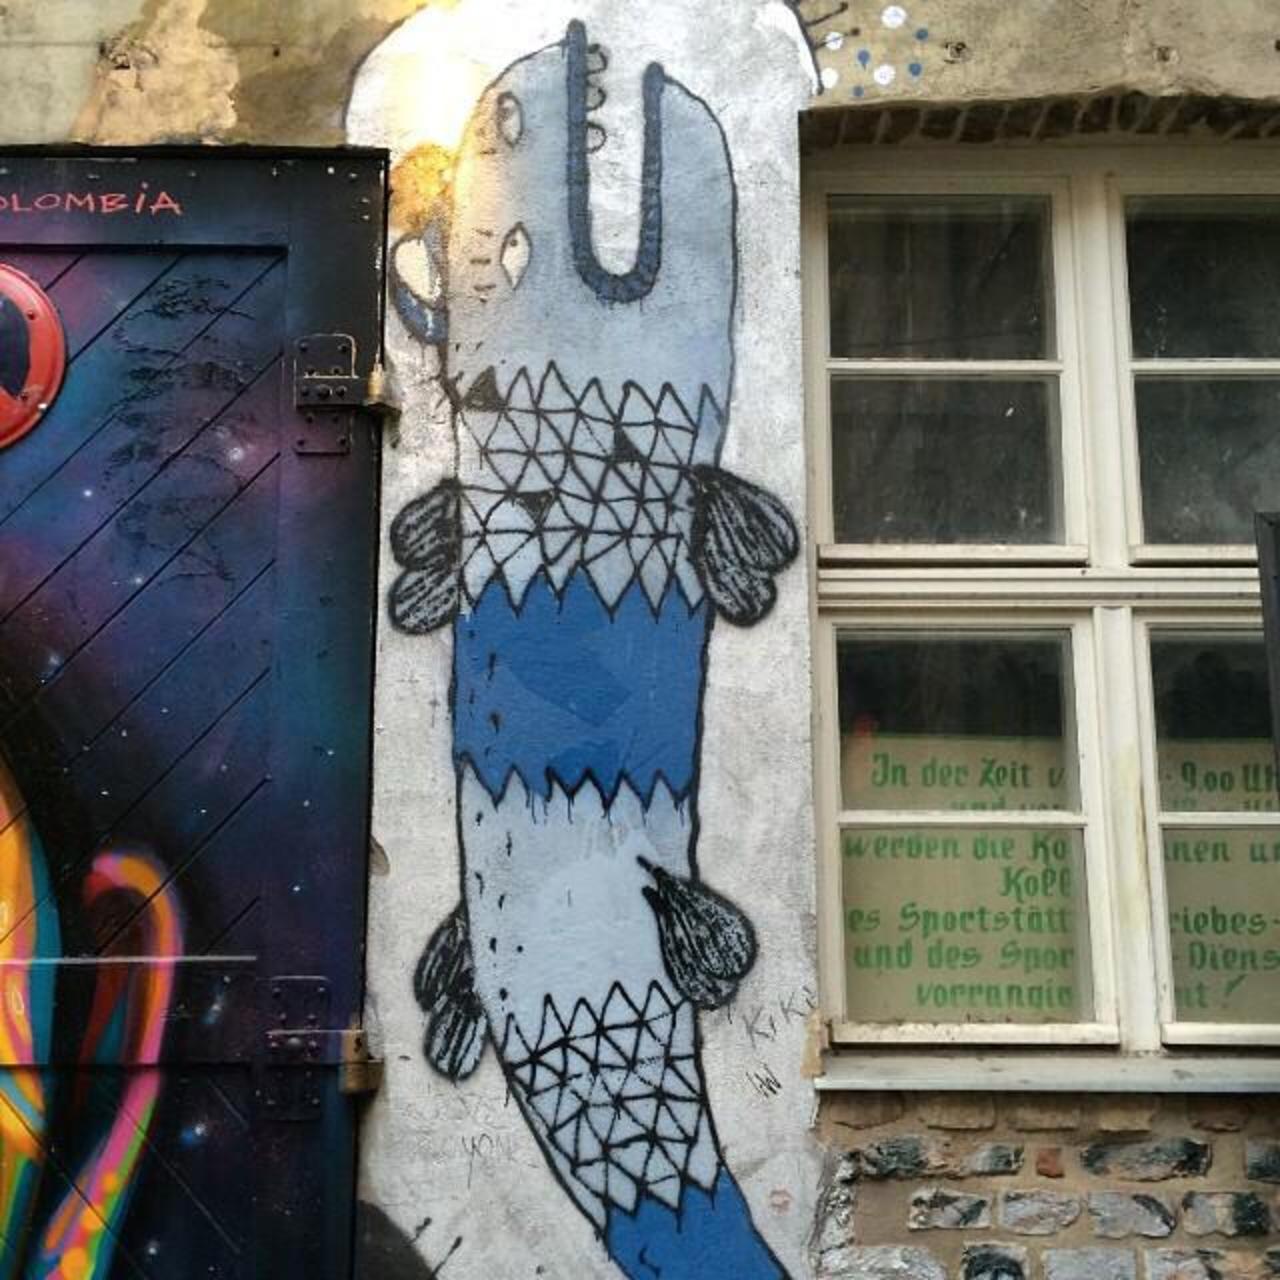 #Berlin #Allemagne #streetart #street #art #urbanart #urbantag #graffiti #streetartberlin by becombegeek http://t.co/dKIEWxs7rI